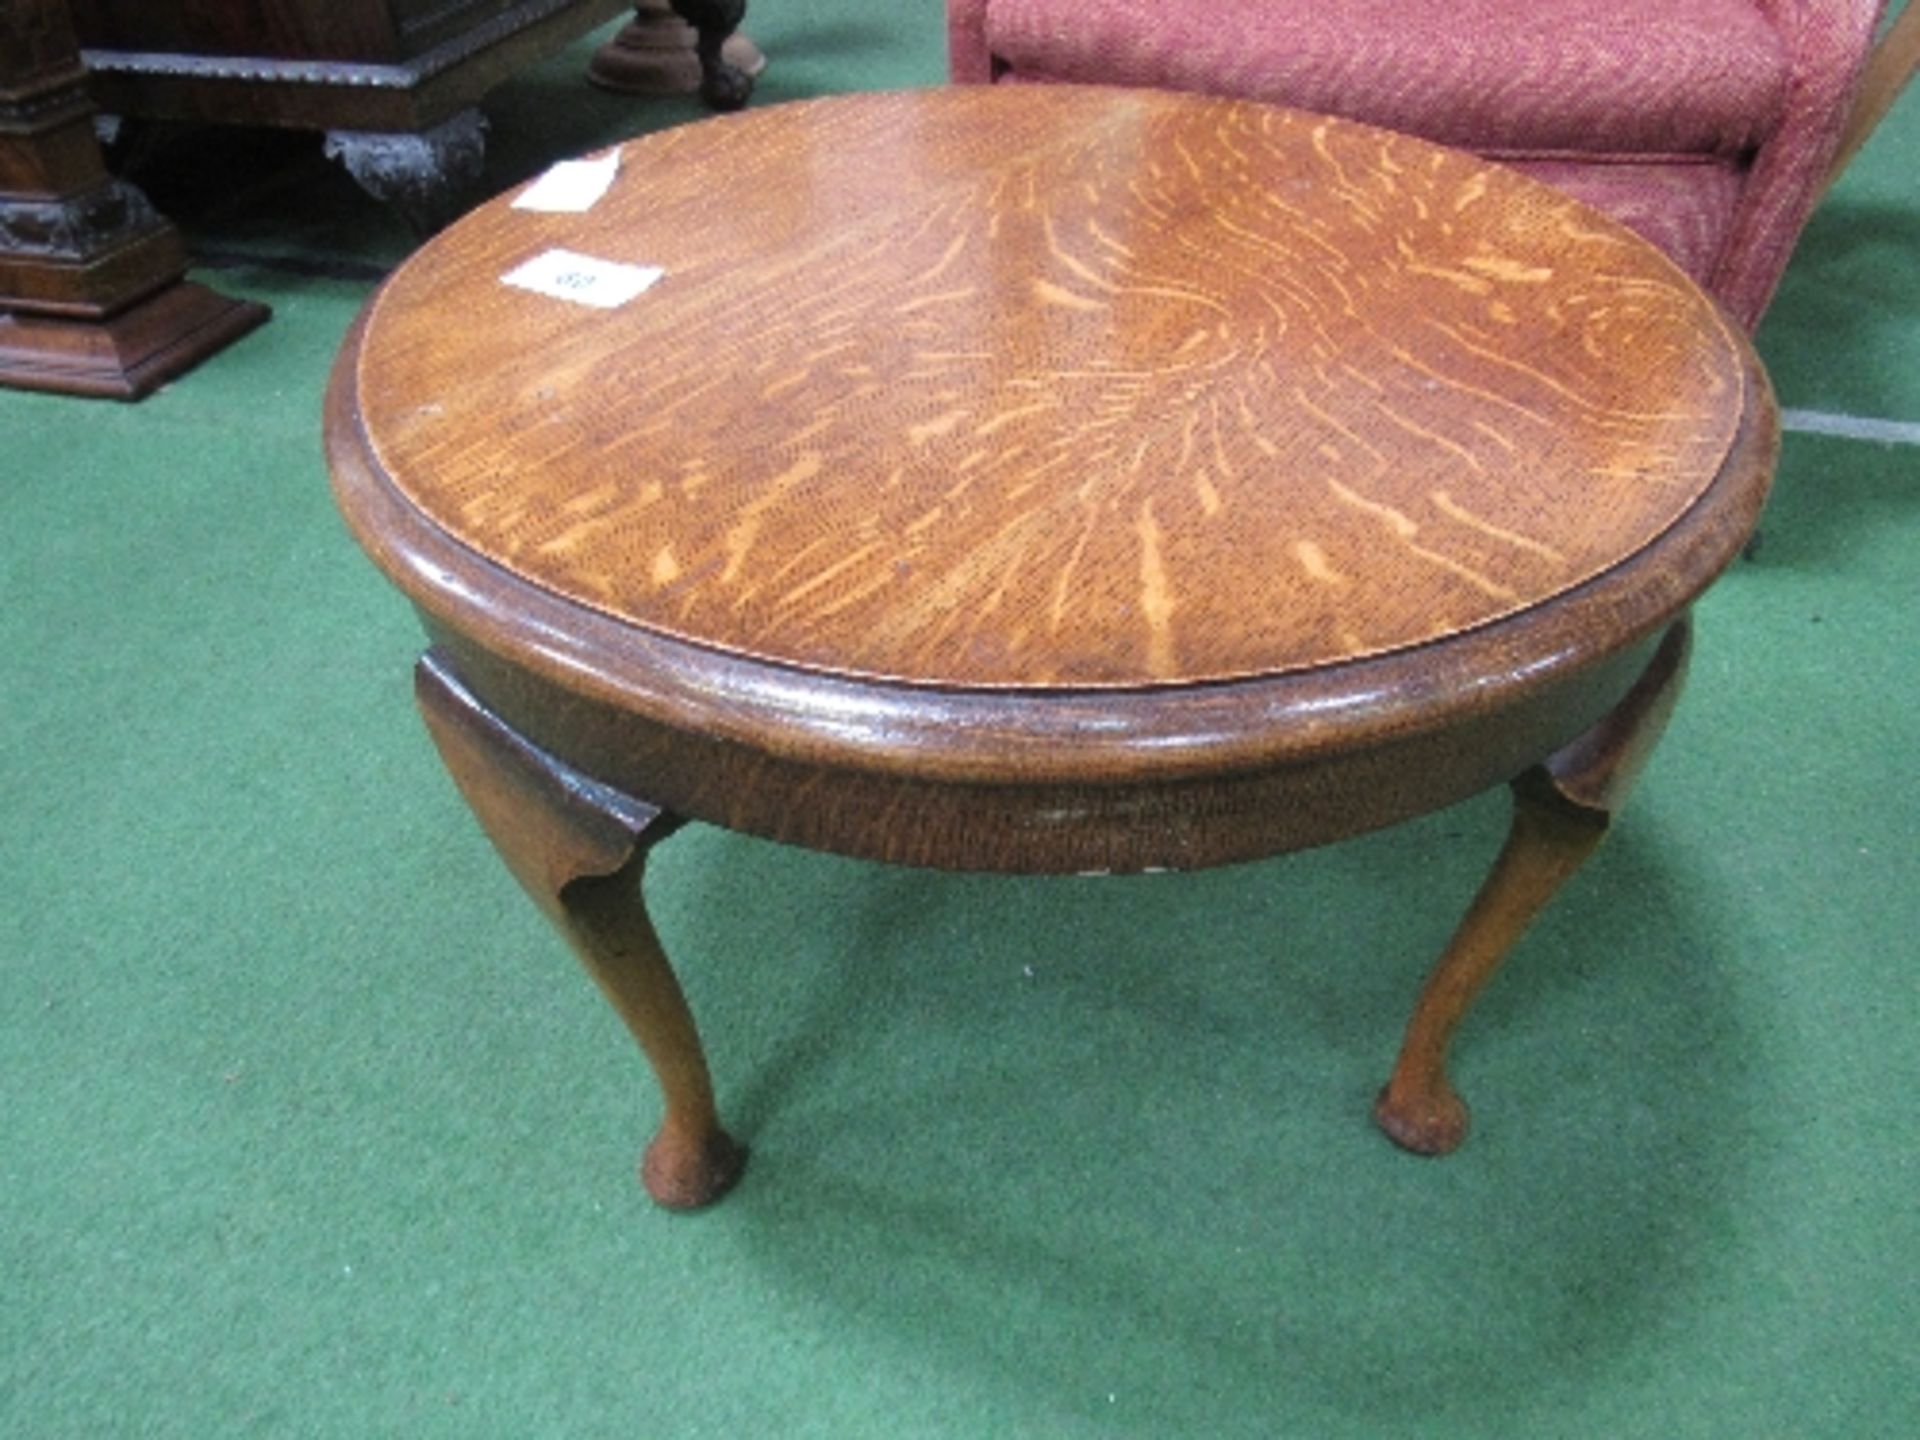 Oak circular coffee table, diameter 58cms, height 40cms. Estimate £10-20